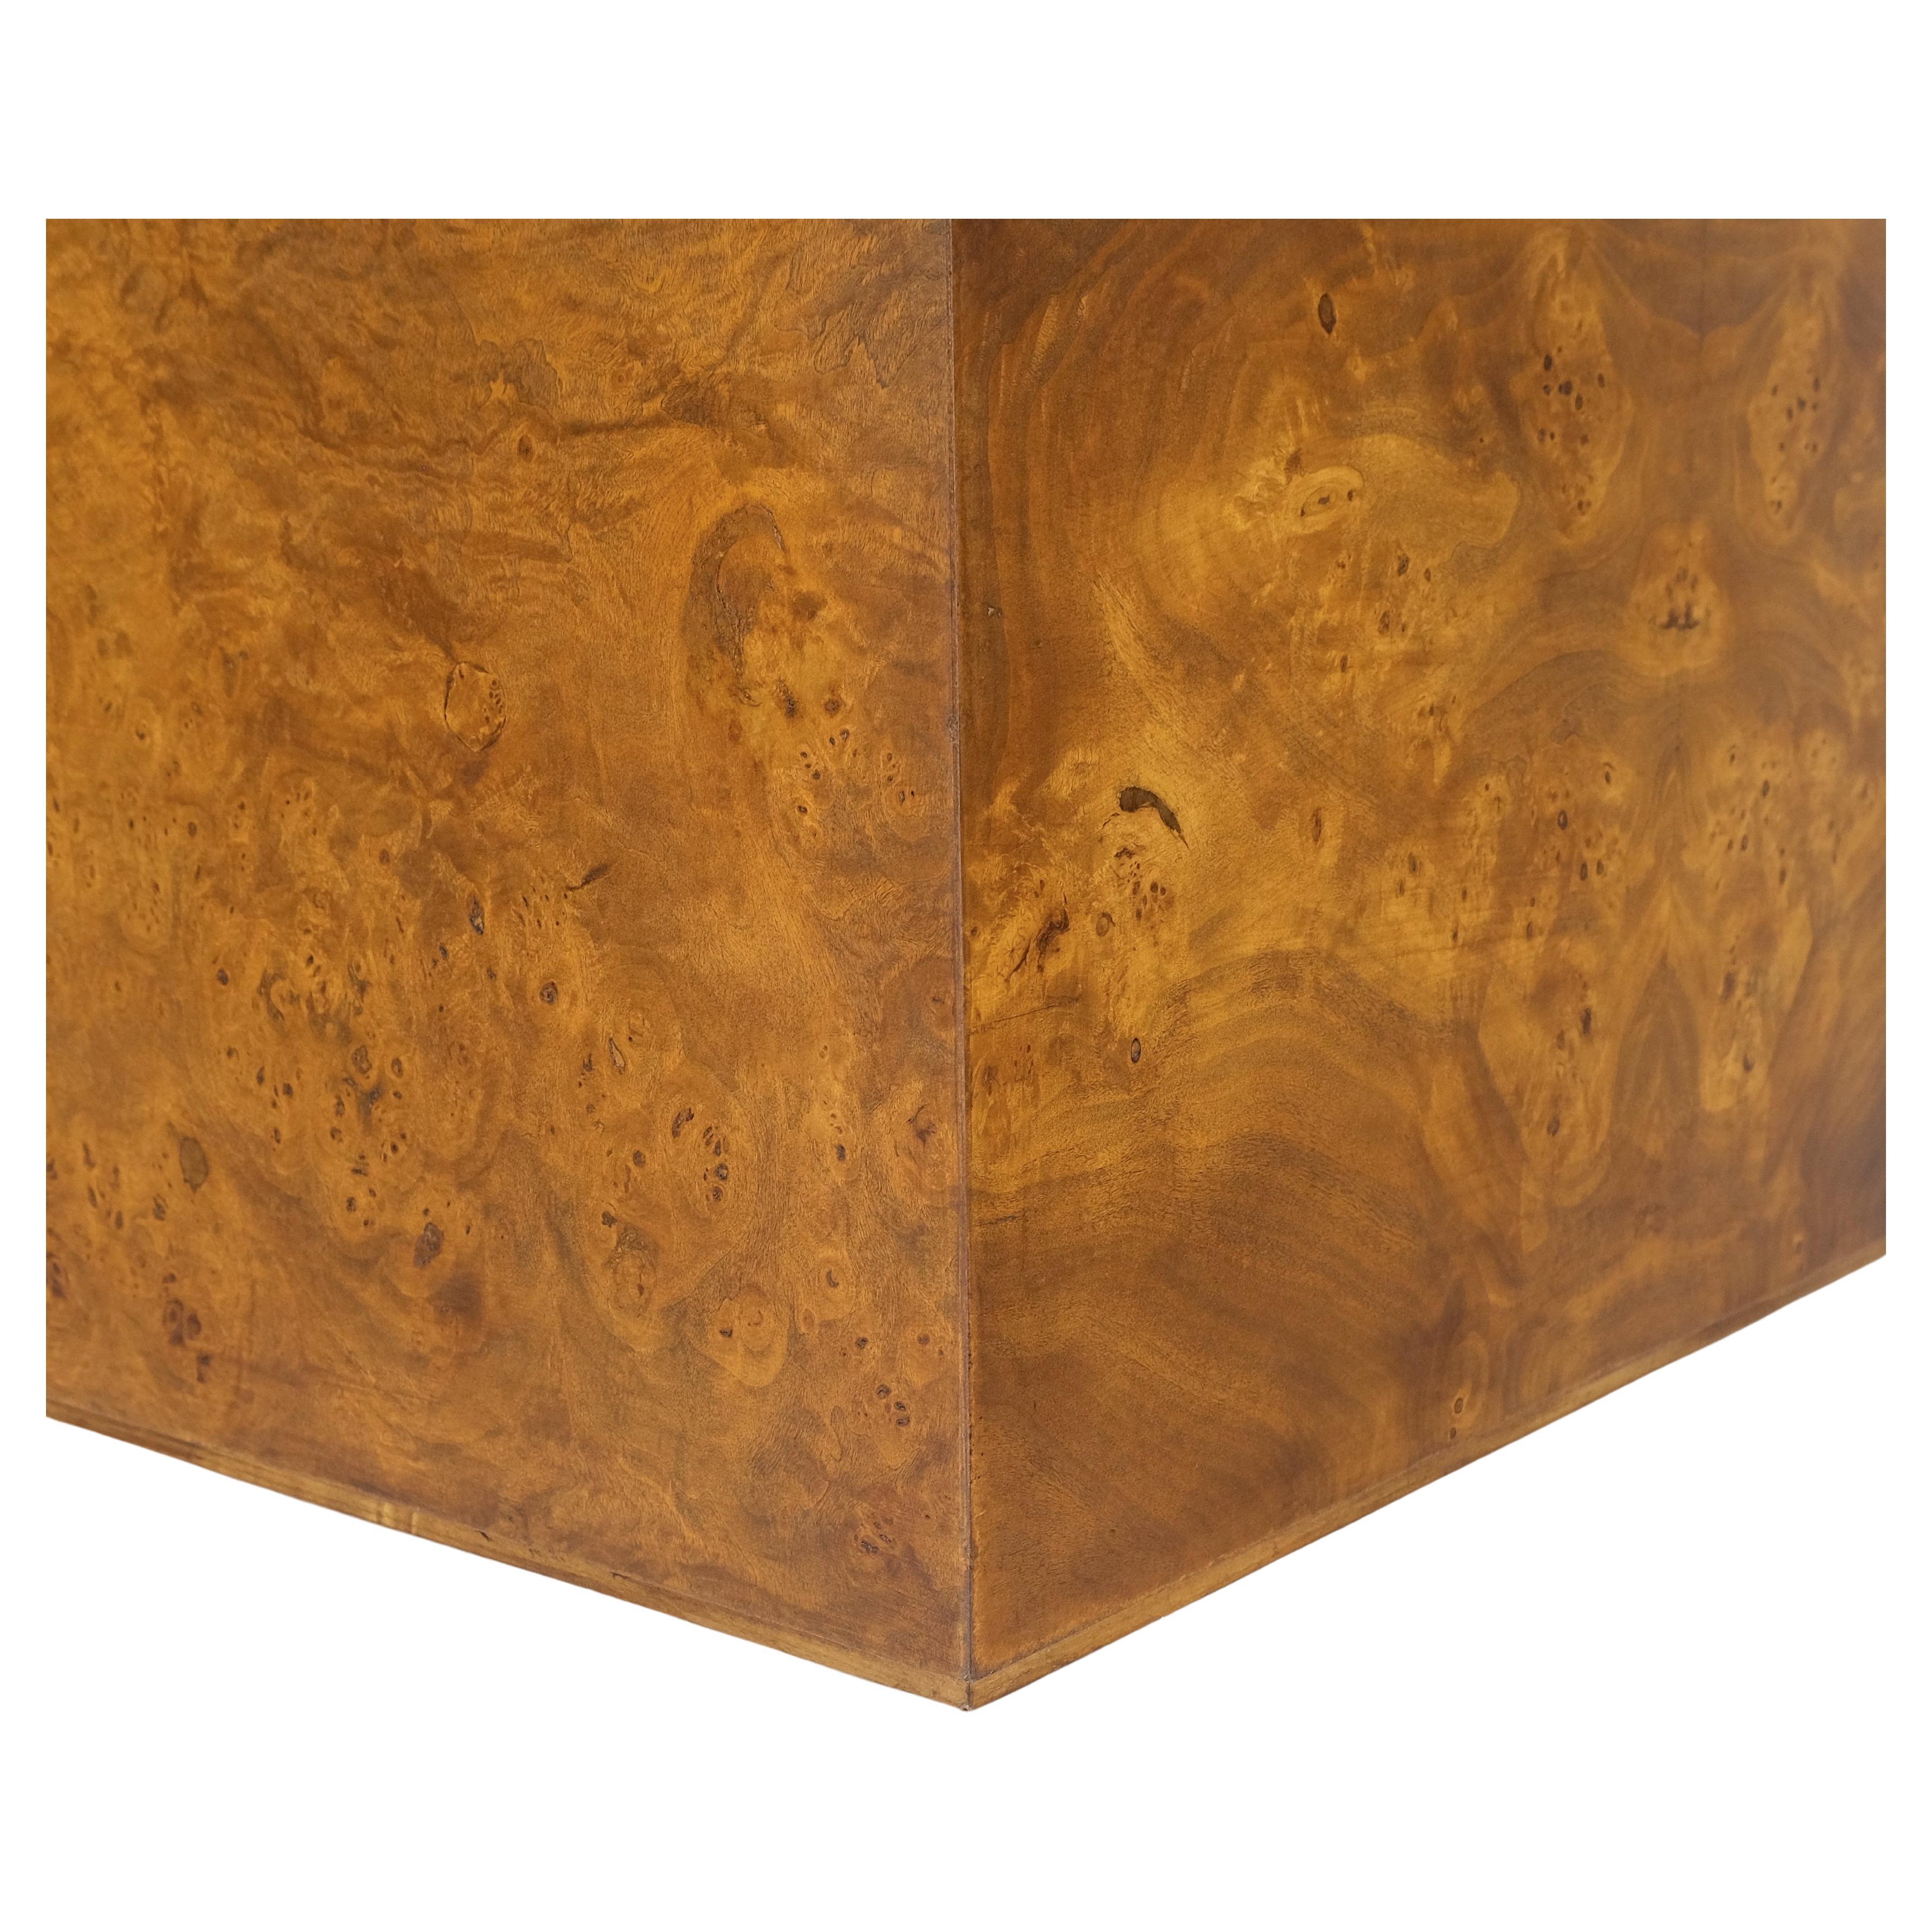 American Large Burl Wood Cube Shape Square Coffee Table Stand Milo Baughman atr. MINT!